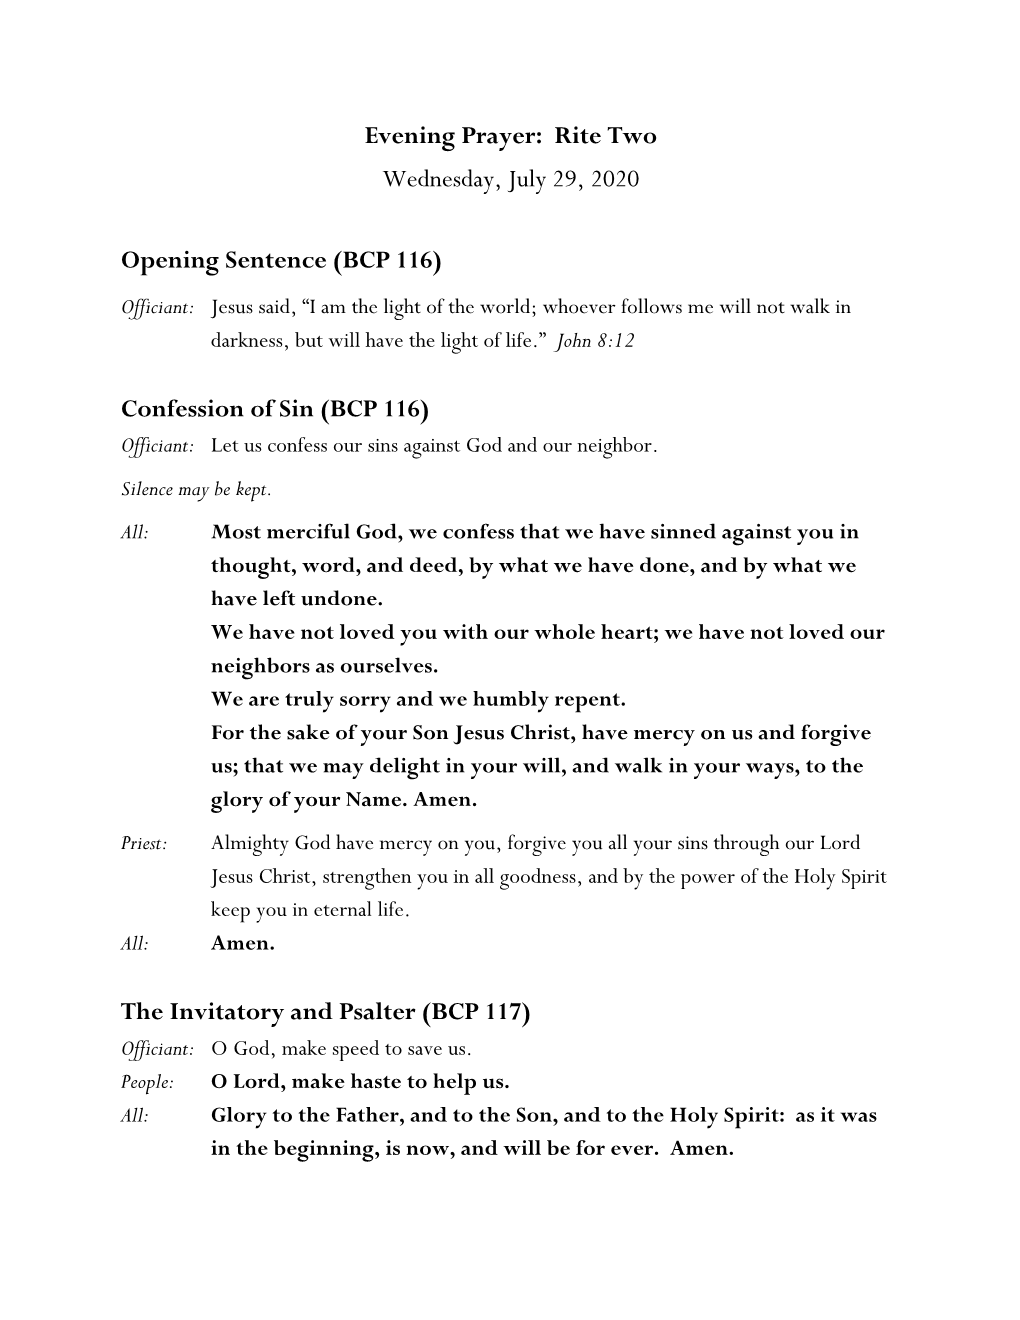 Evening Prayer: Rite Two Wednesday, July 29, 2020 Opening